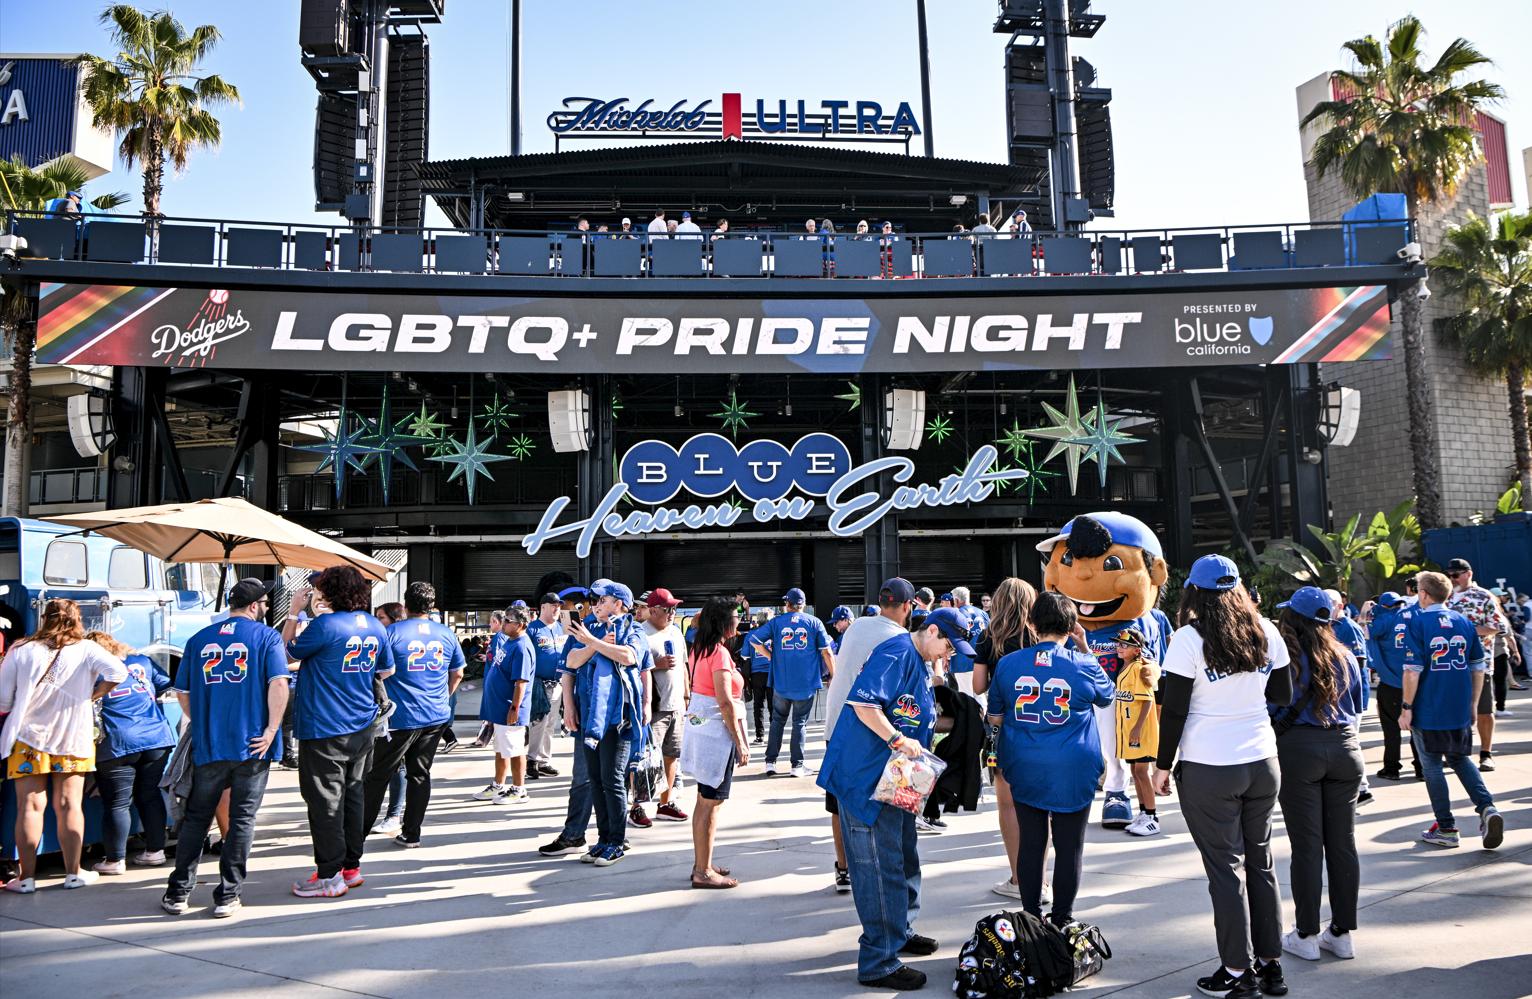 Dodgers celebrate 10th annual Pride Night